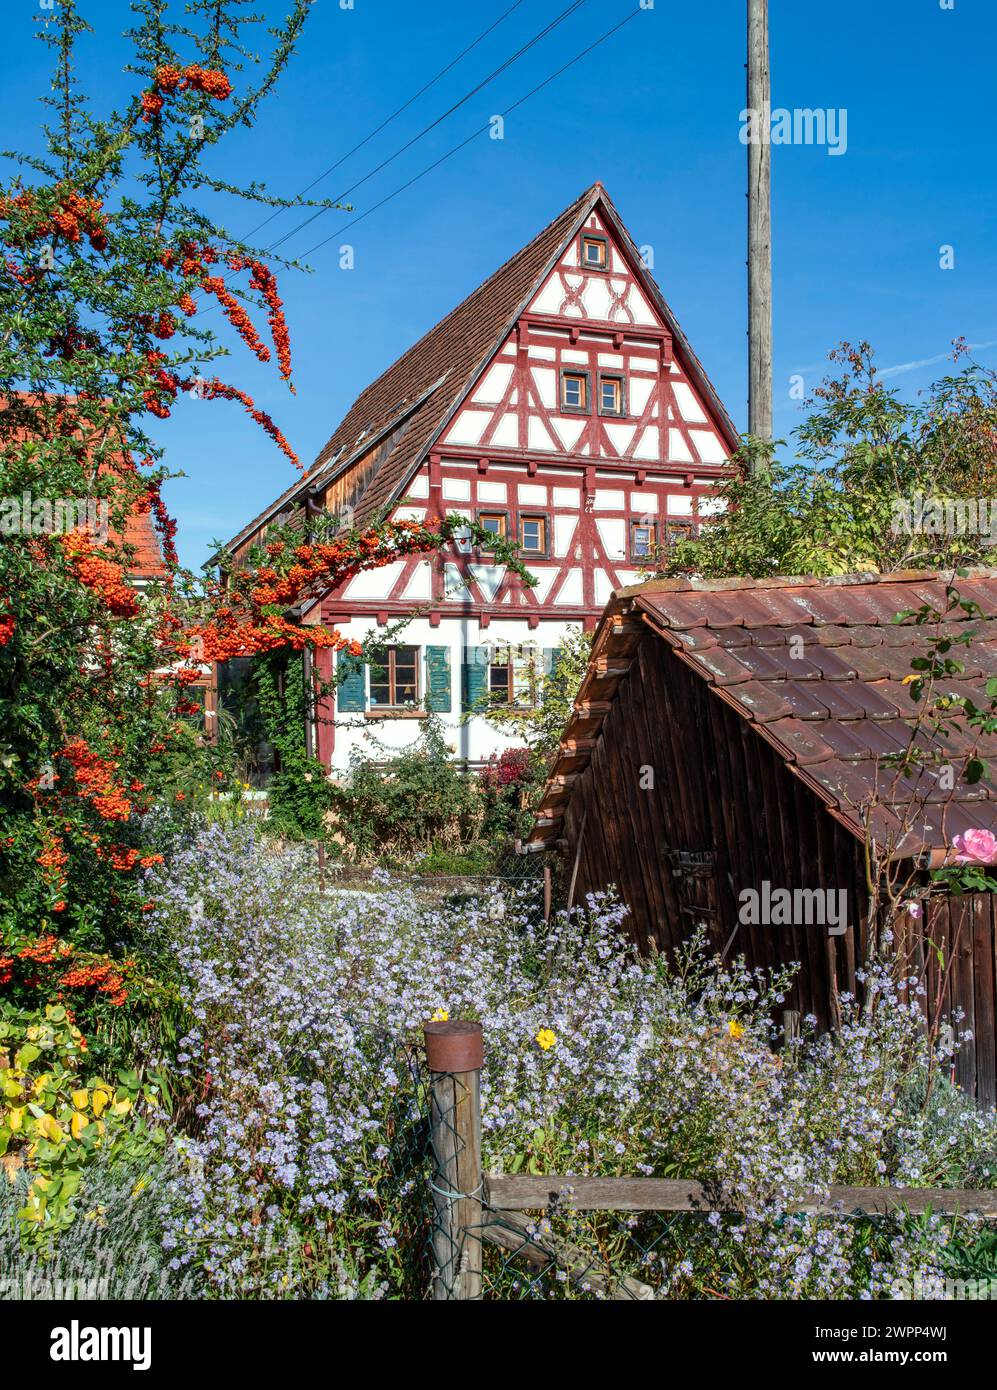 Nehren, district of Tübingen, half-timbered gable on the house at Hauchlinger Straße 27. Farm garden with garden house, flowers and sea buckthorn. Stock Photo